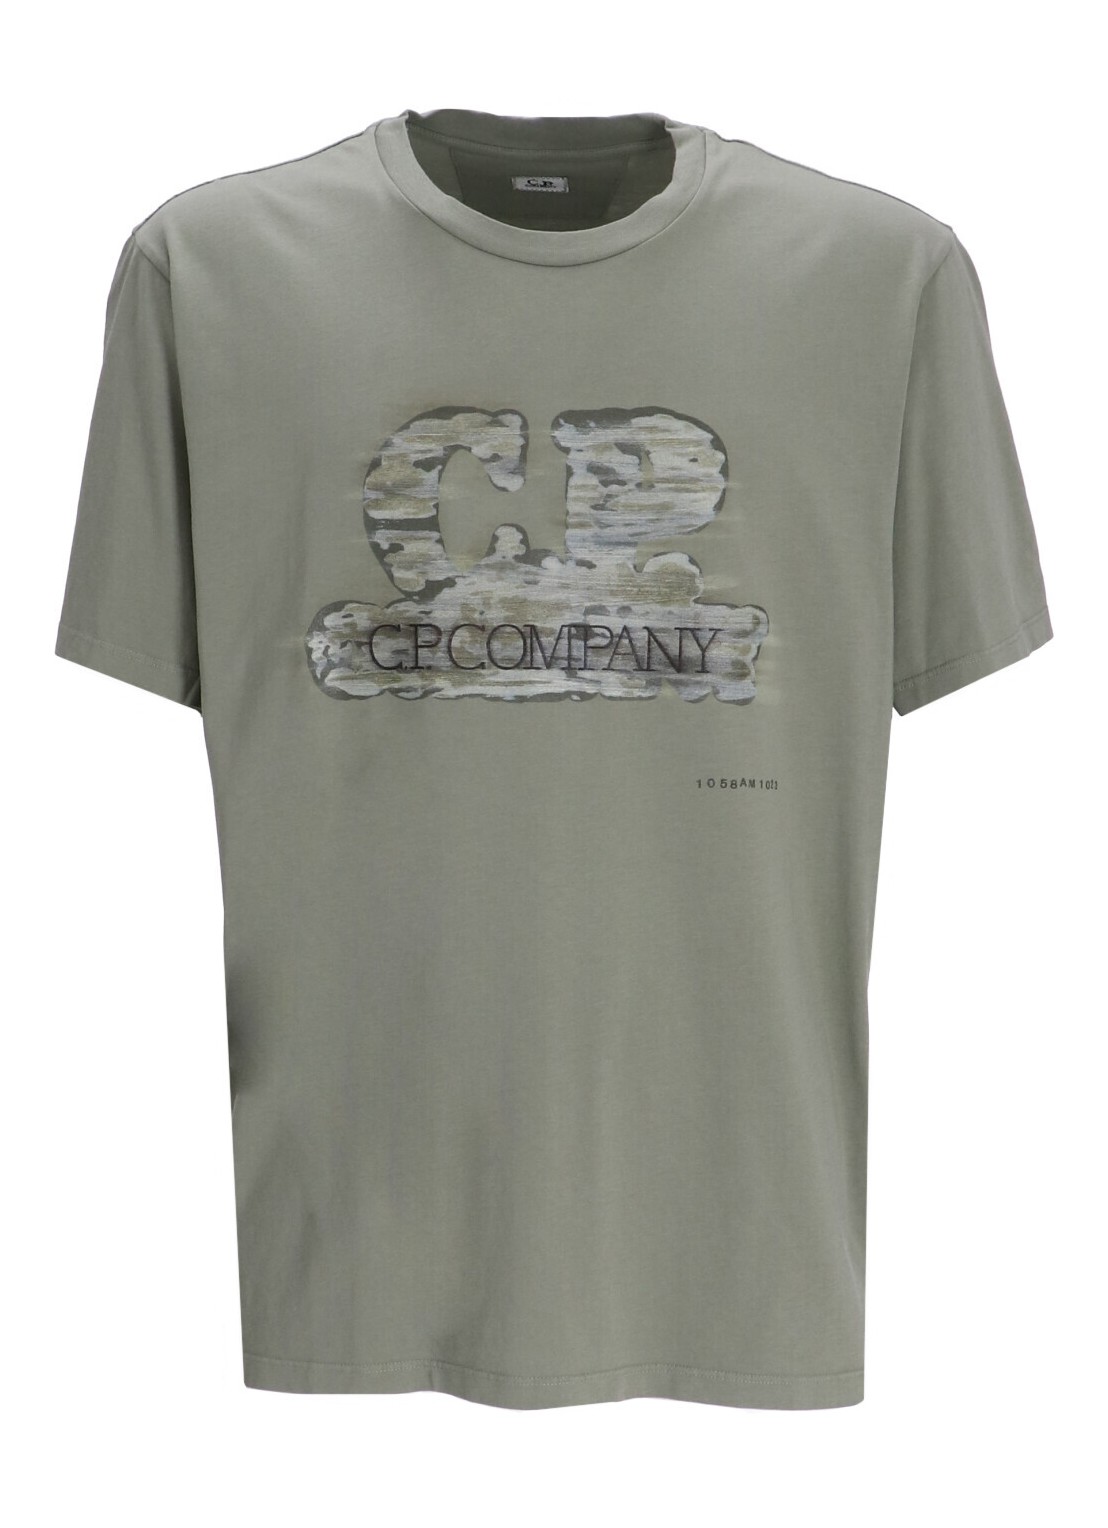 Camiseta c.p.company t-shirt man24/1 jersey artisanal logo t-shirt - 16cmts299a005431g 627 talla ver